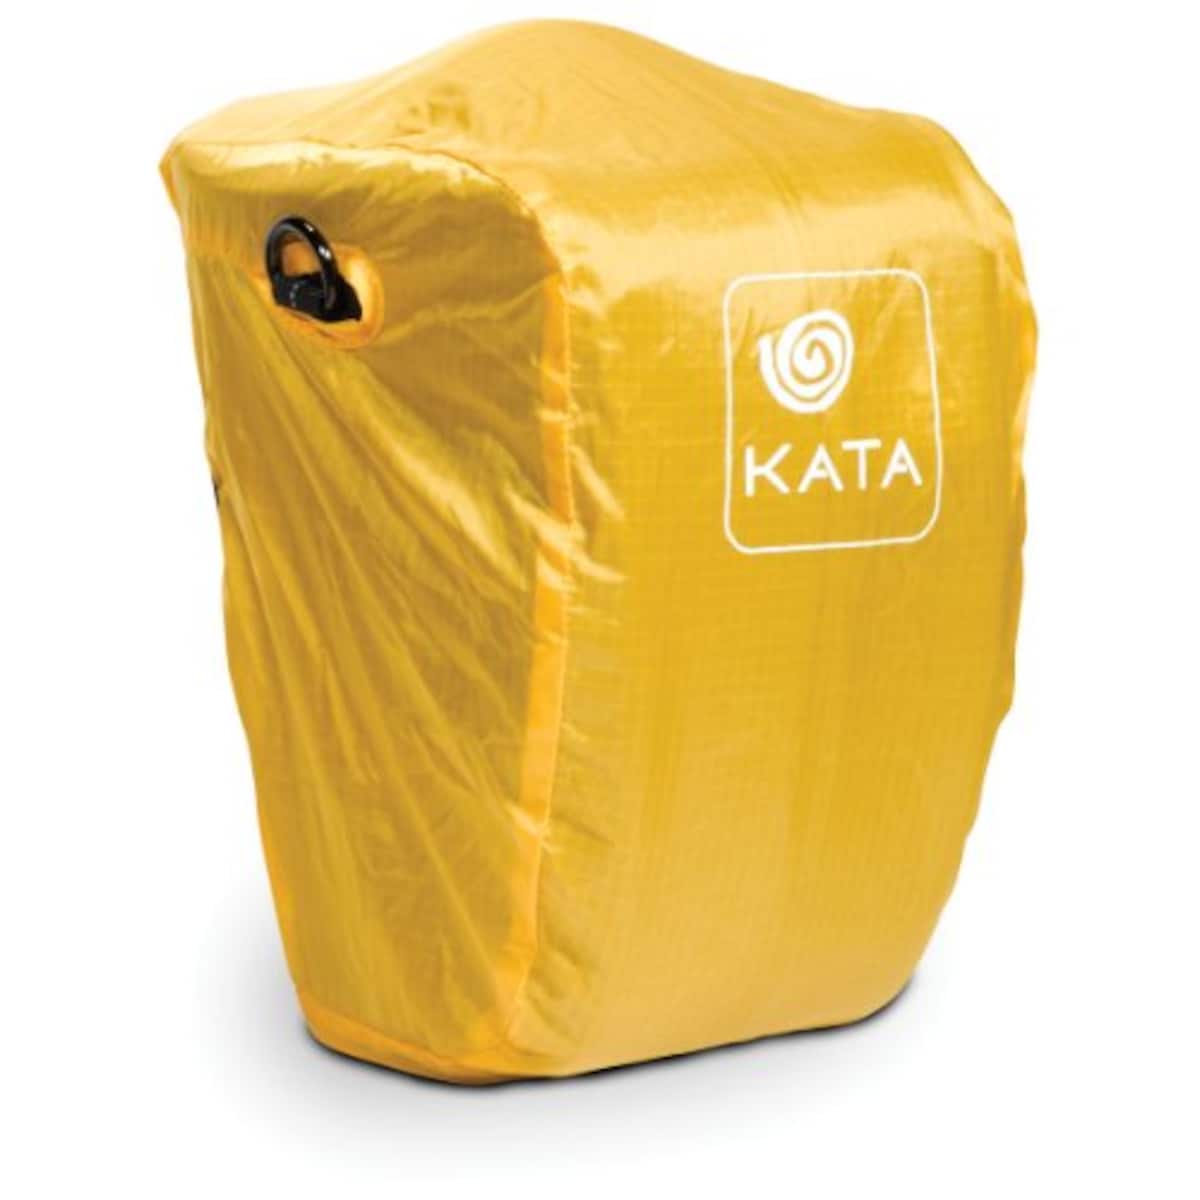  KATA ズームバッグ/ホルスター D-lightコレクション レインカバー付属 グレー KT DL-G-14-G画像3 